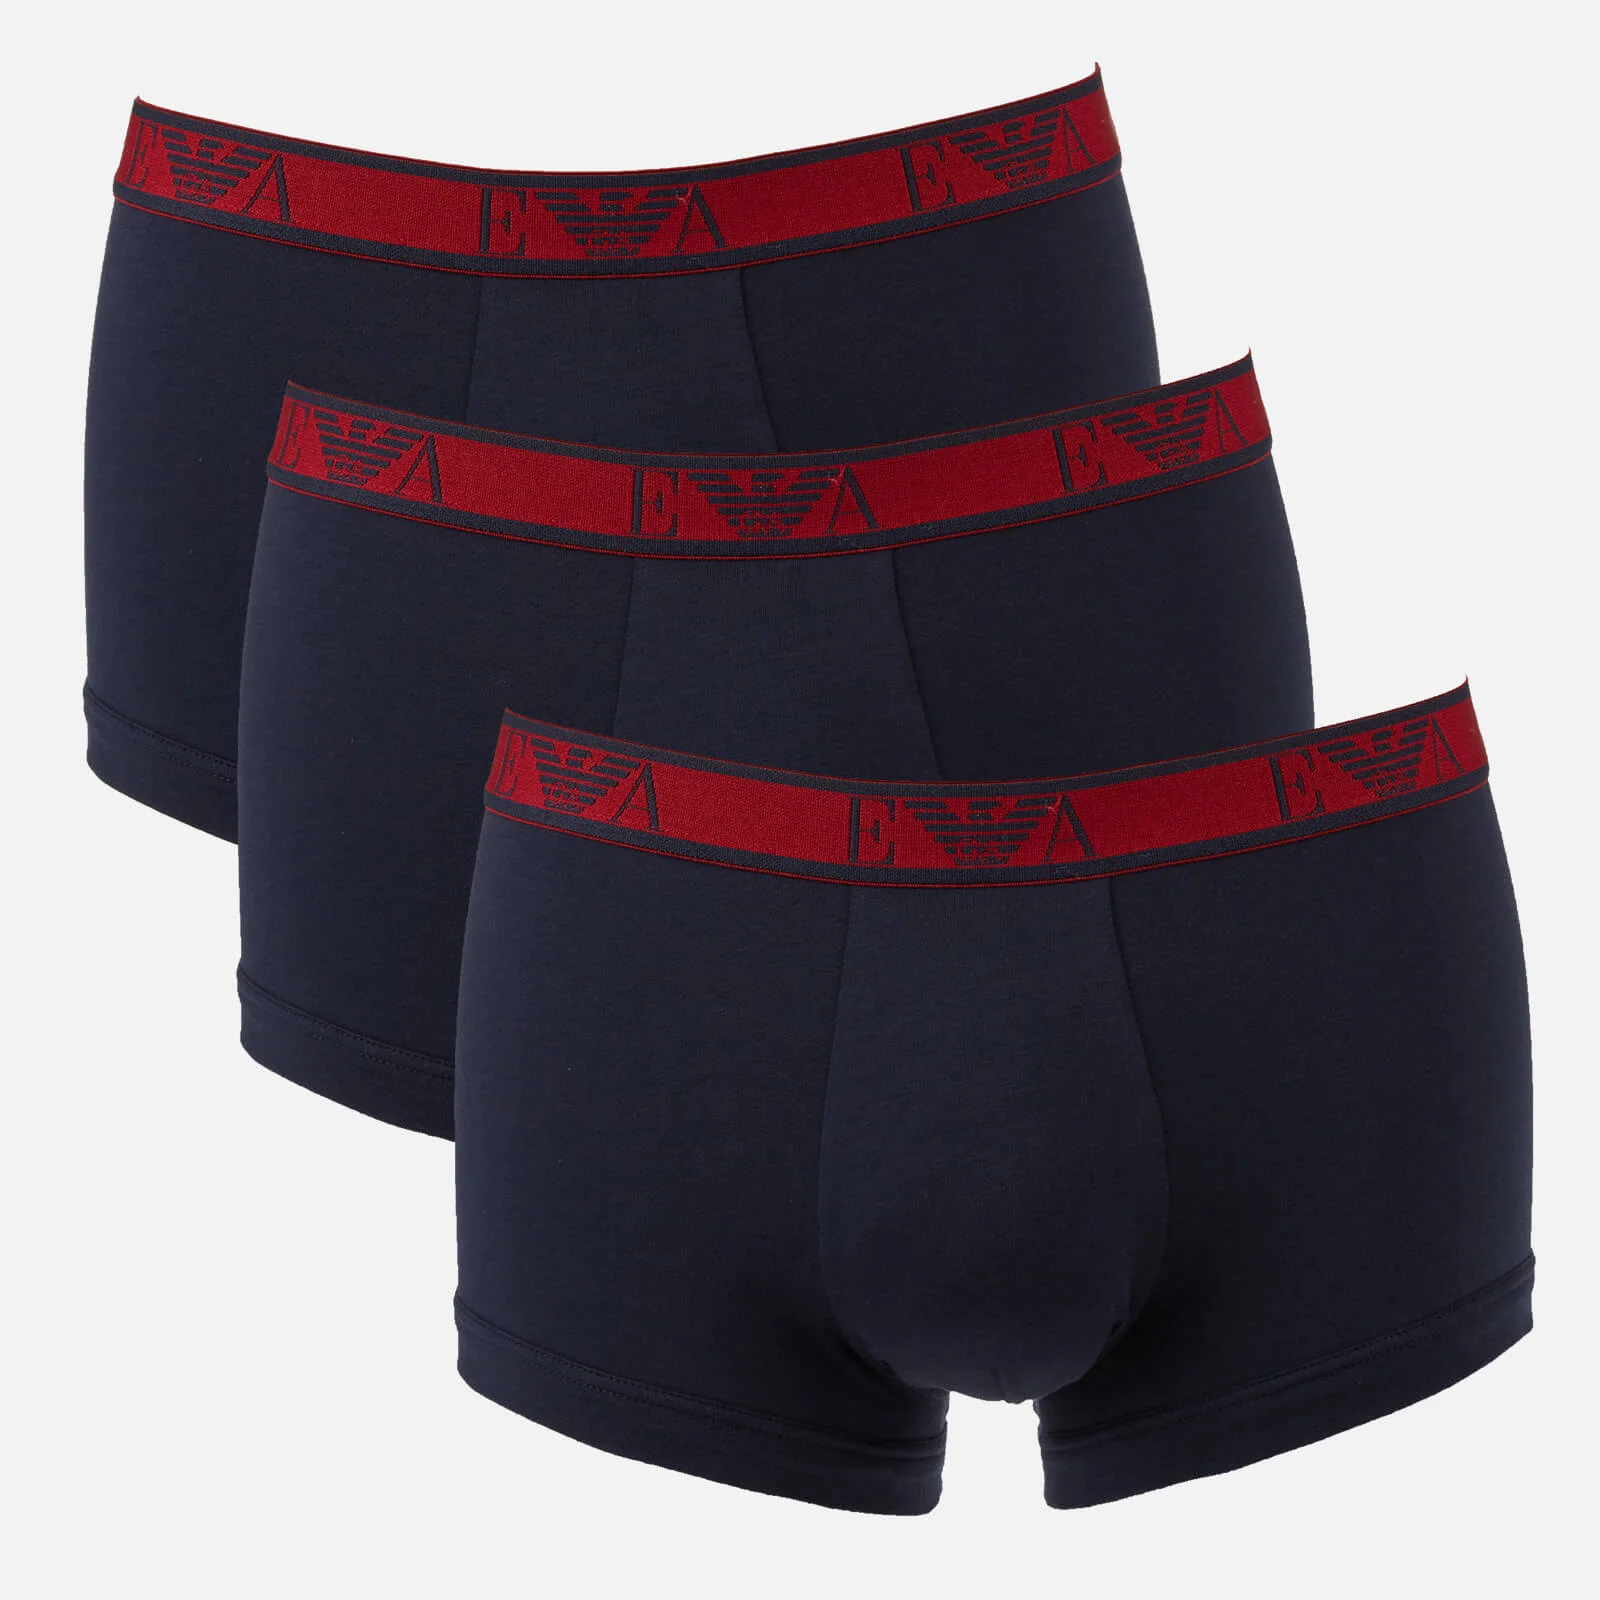 Emporio Armani Men's Monogram 3 Pack Trunk Boxer Shorts - Burgundy/Multi Image 1